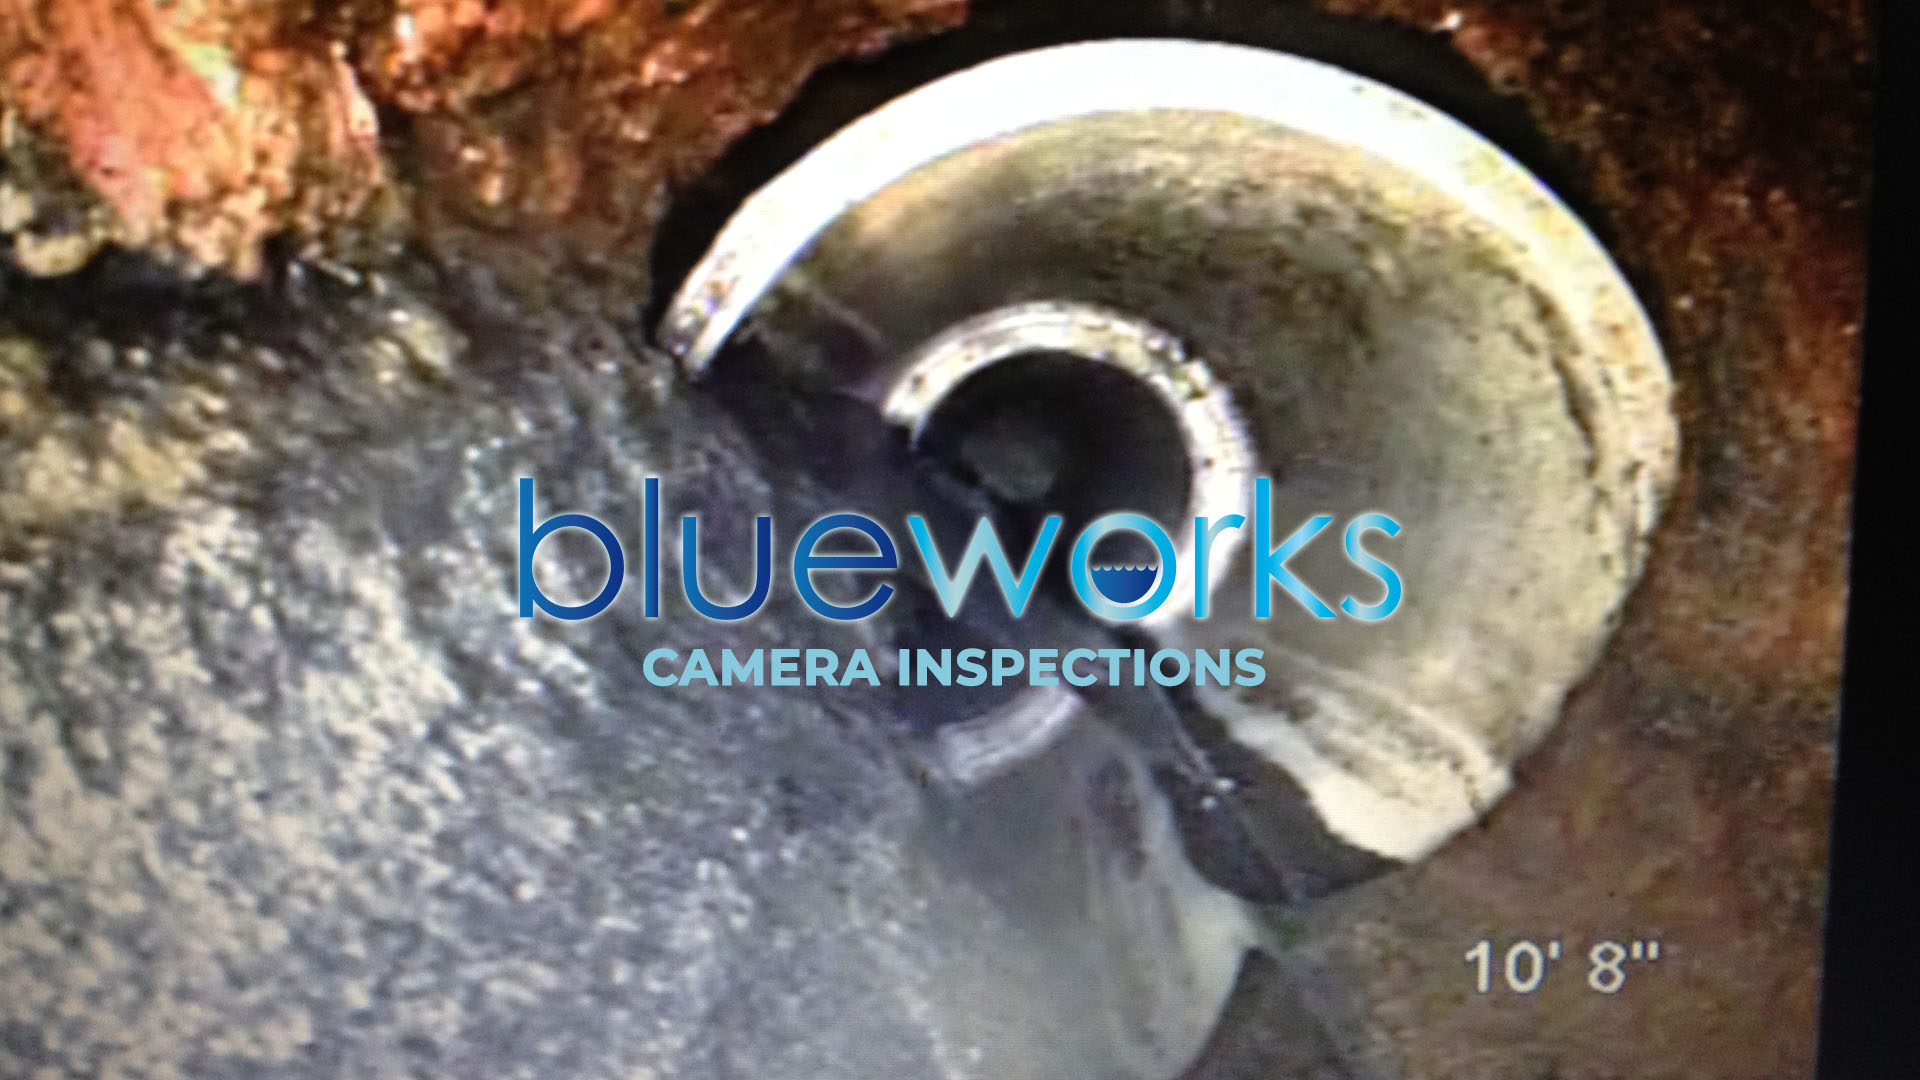 sewer-samera-inspections